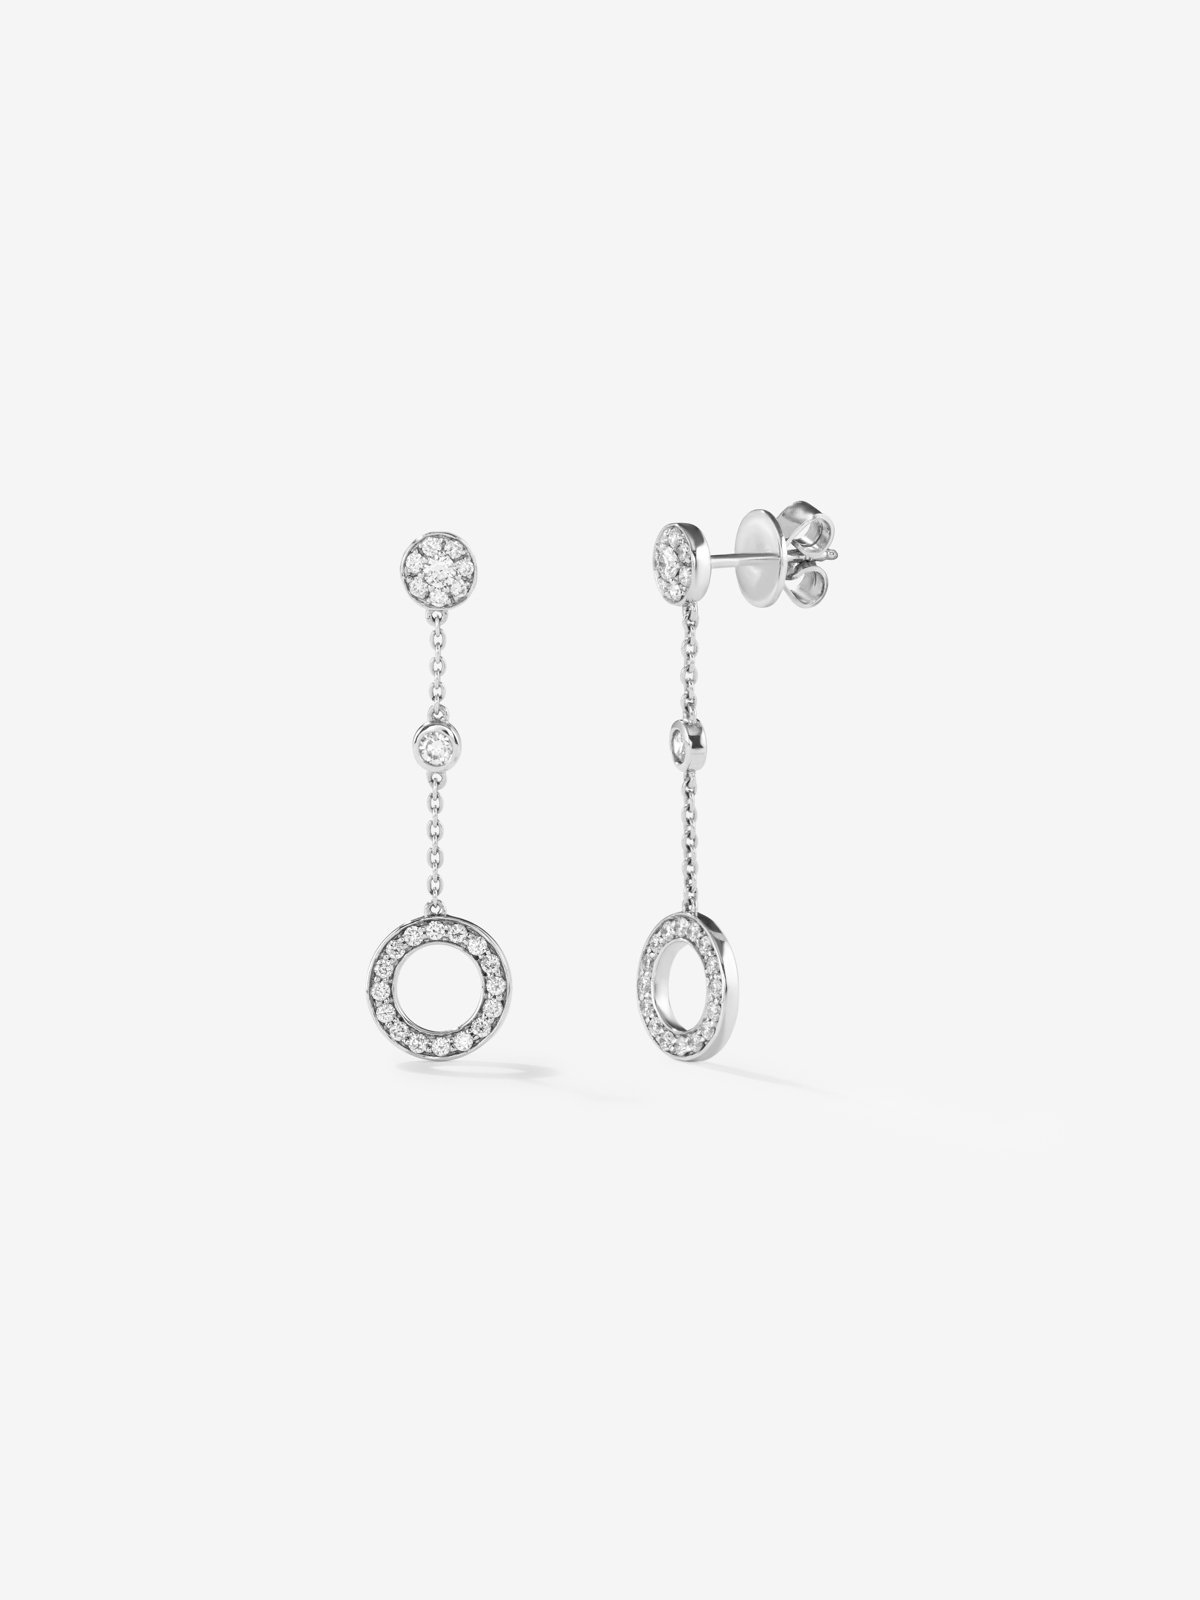 Long 18kt white gold chain earrings with circular diamond motifs.